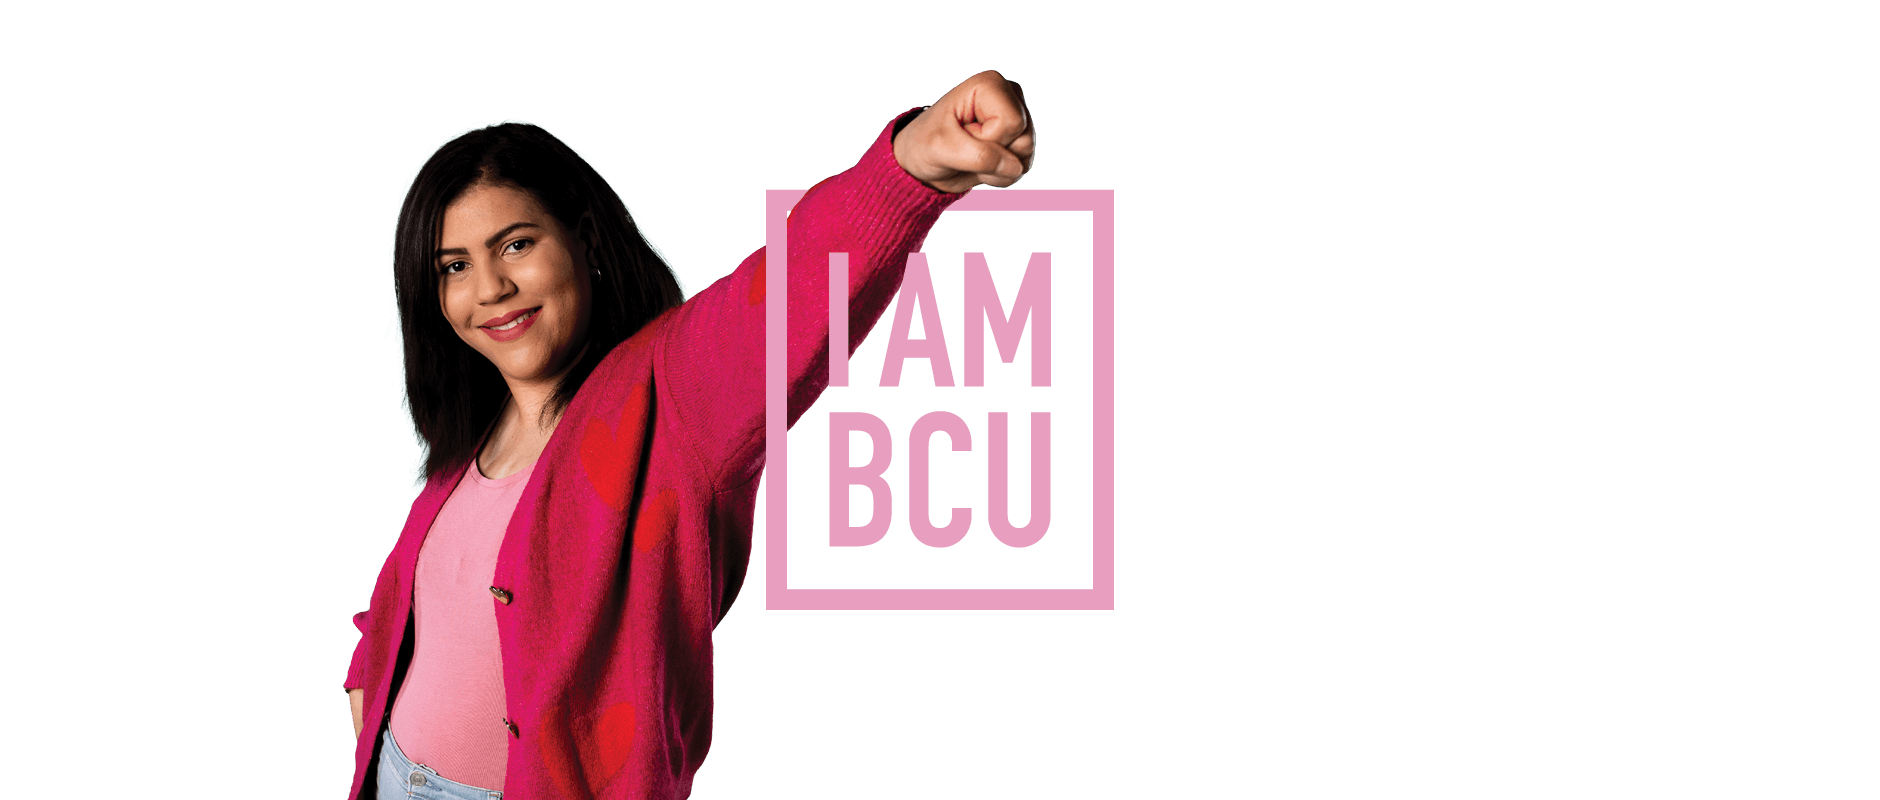 Kimberly punches through the I am BCU logo